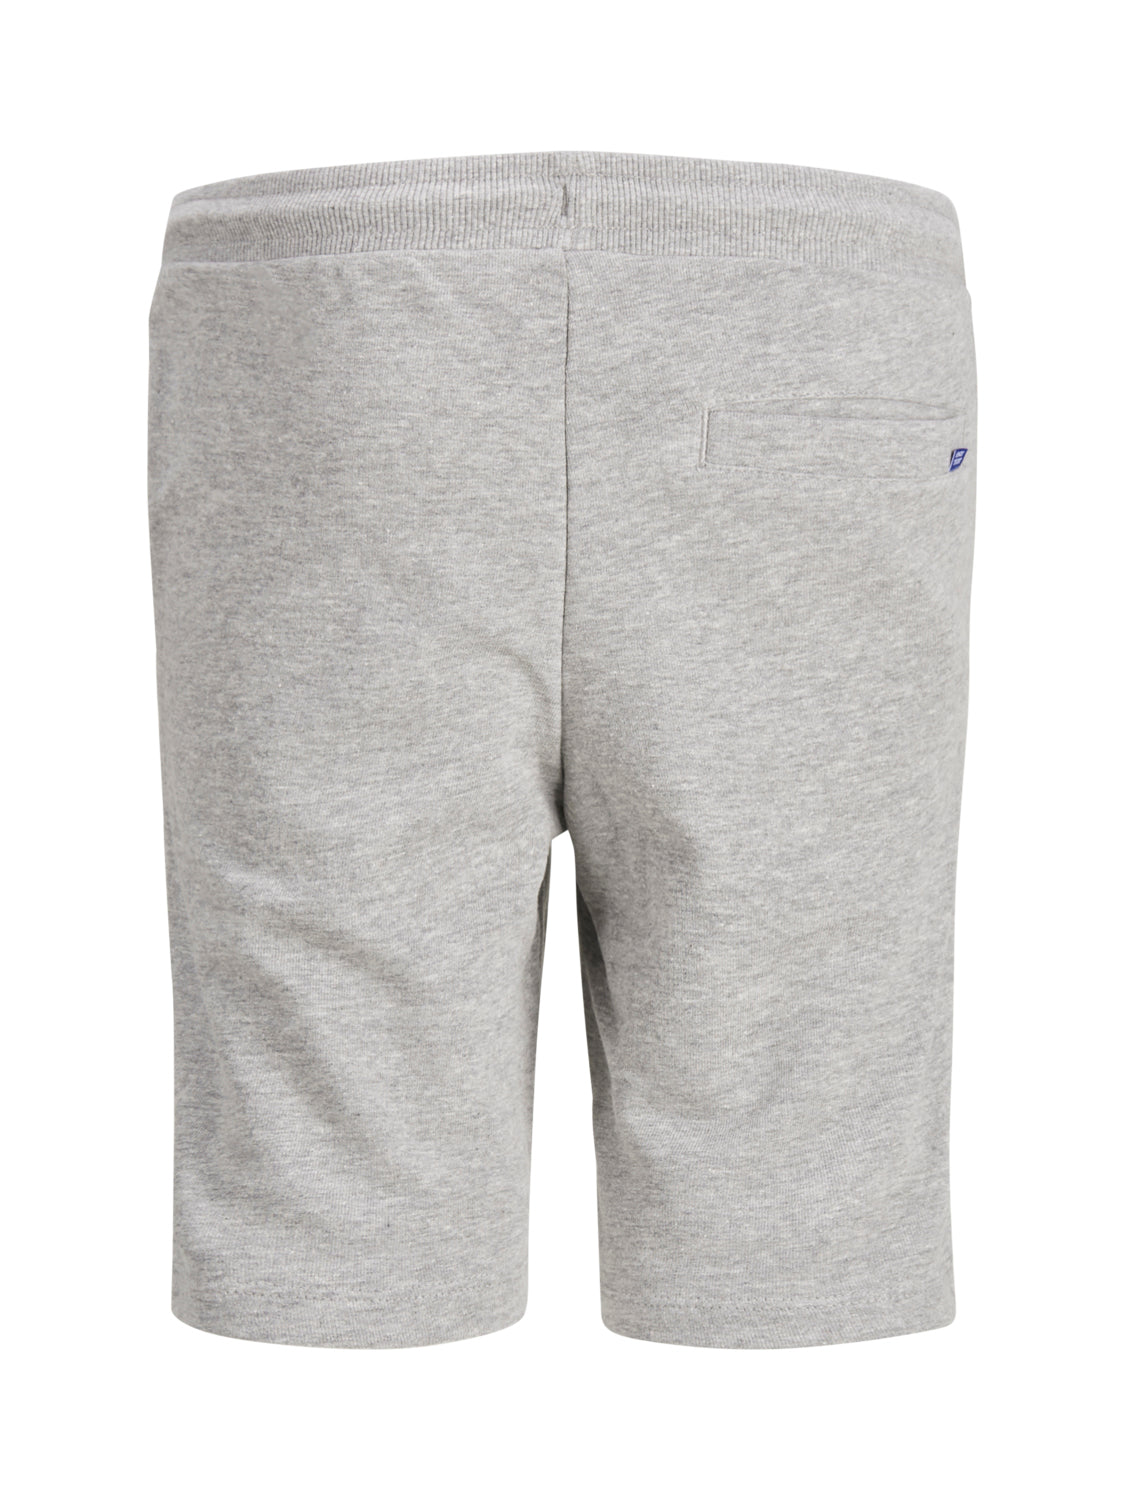 JJI Shorts - light grey melange